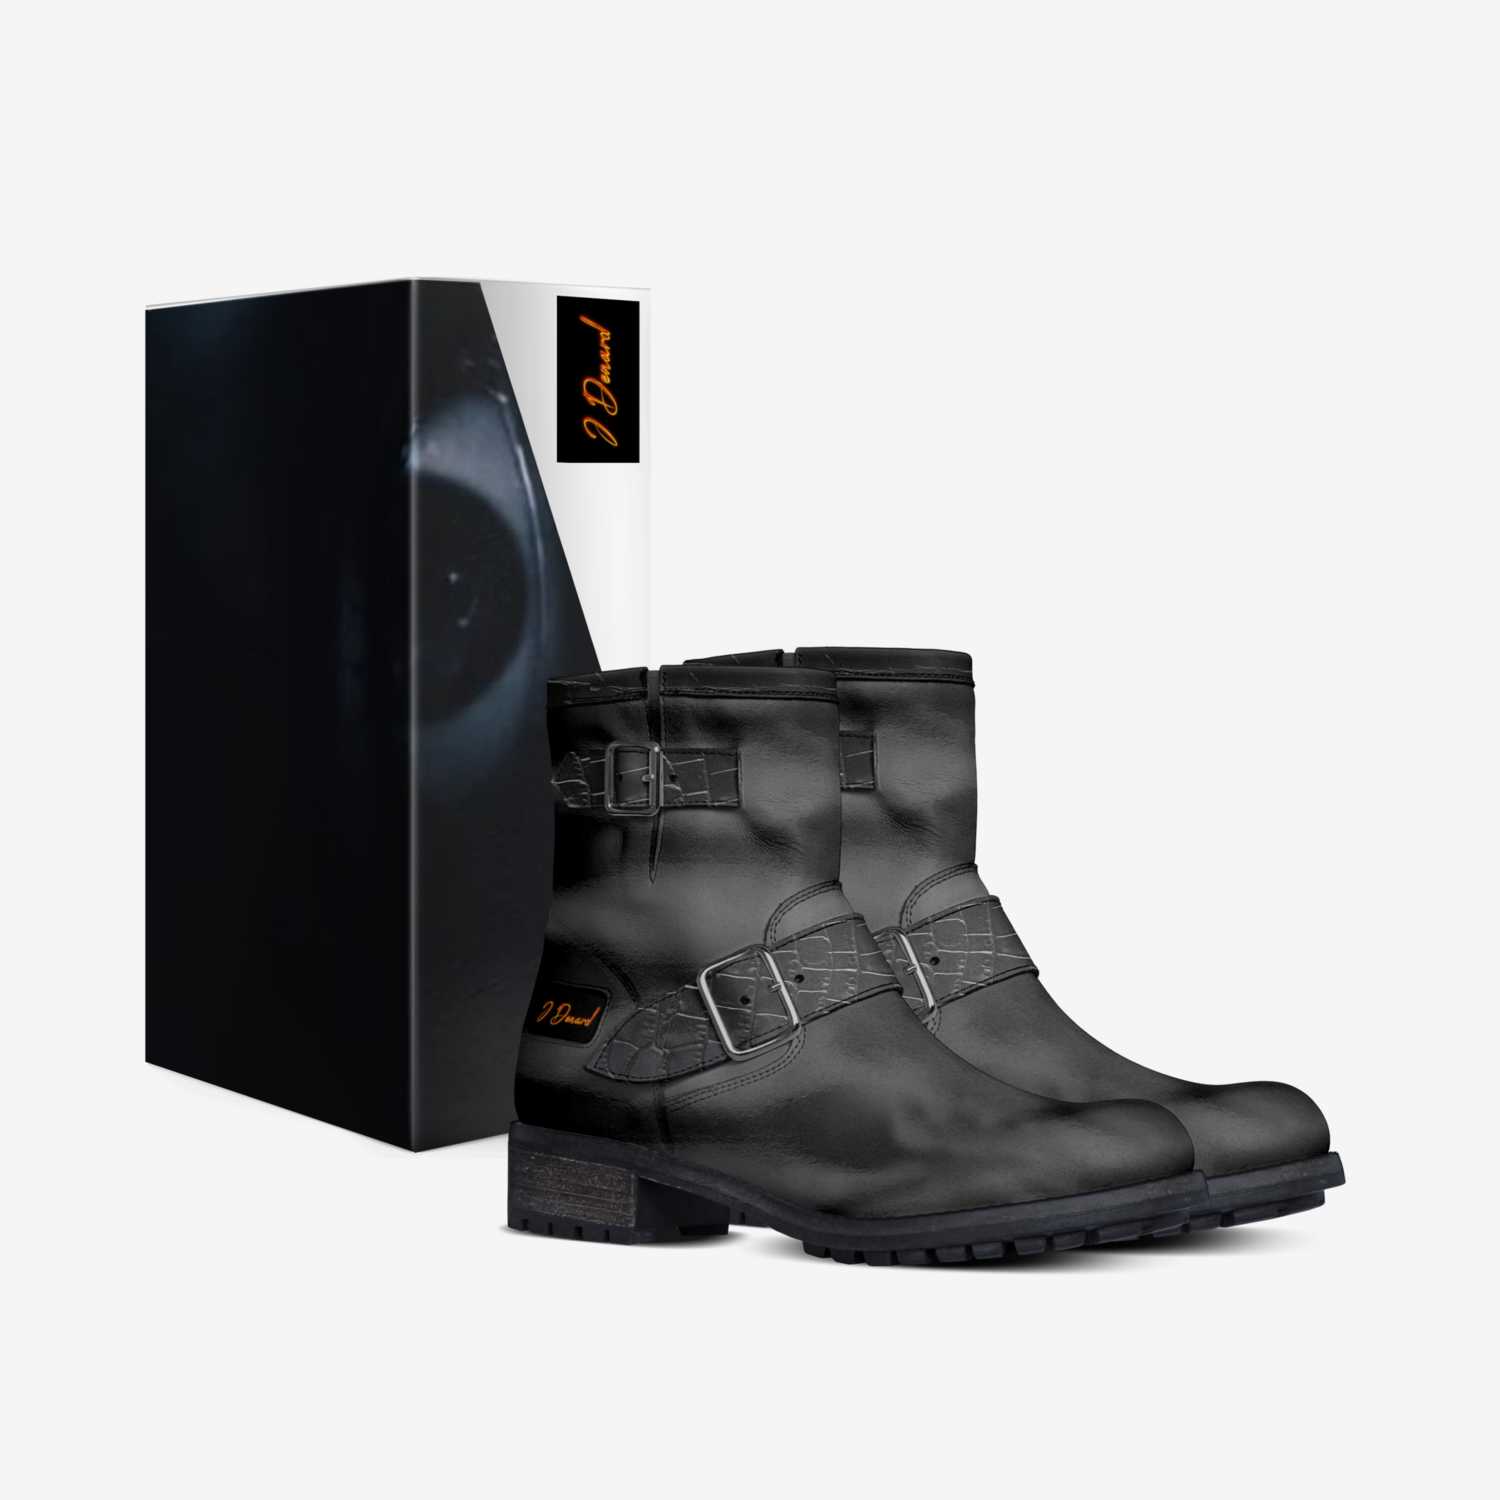 J Denard  custom made in Italy shoes by Jarrod Dixon | Box view